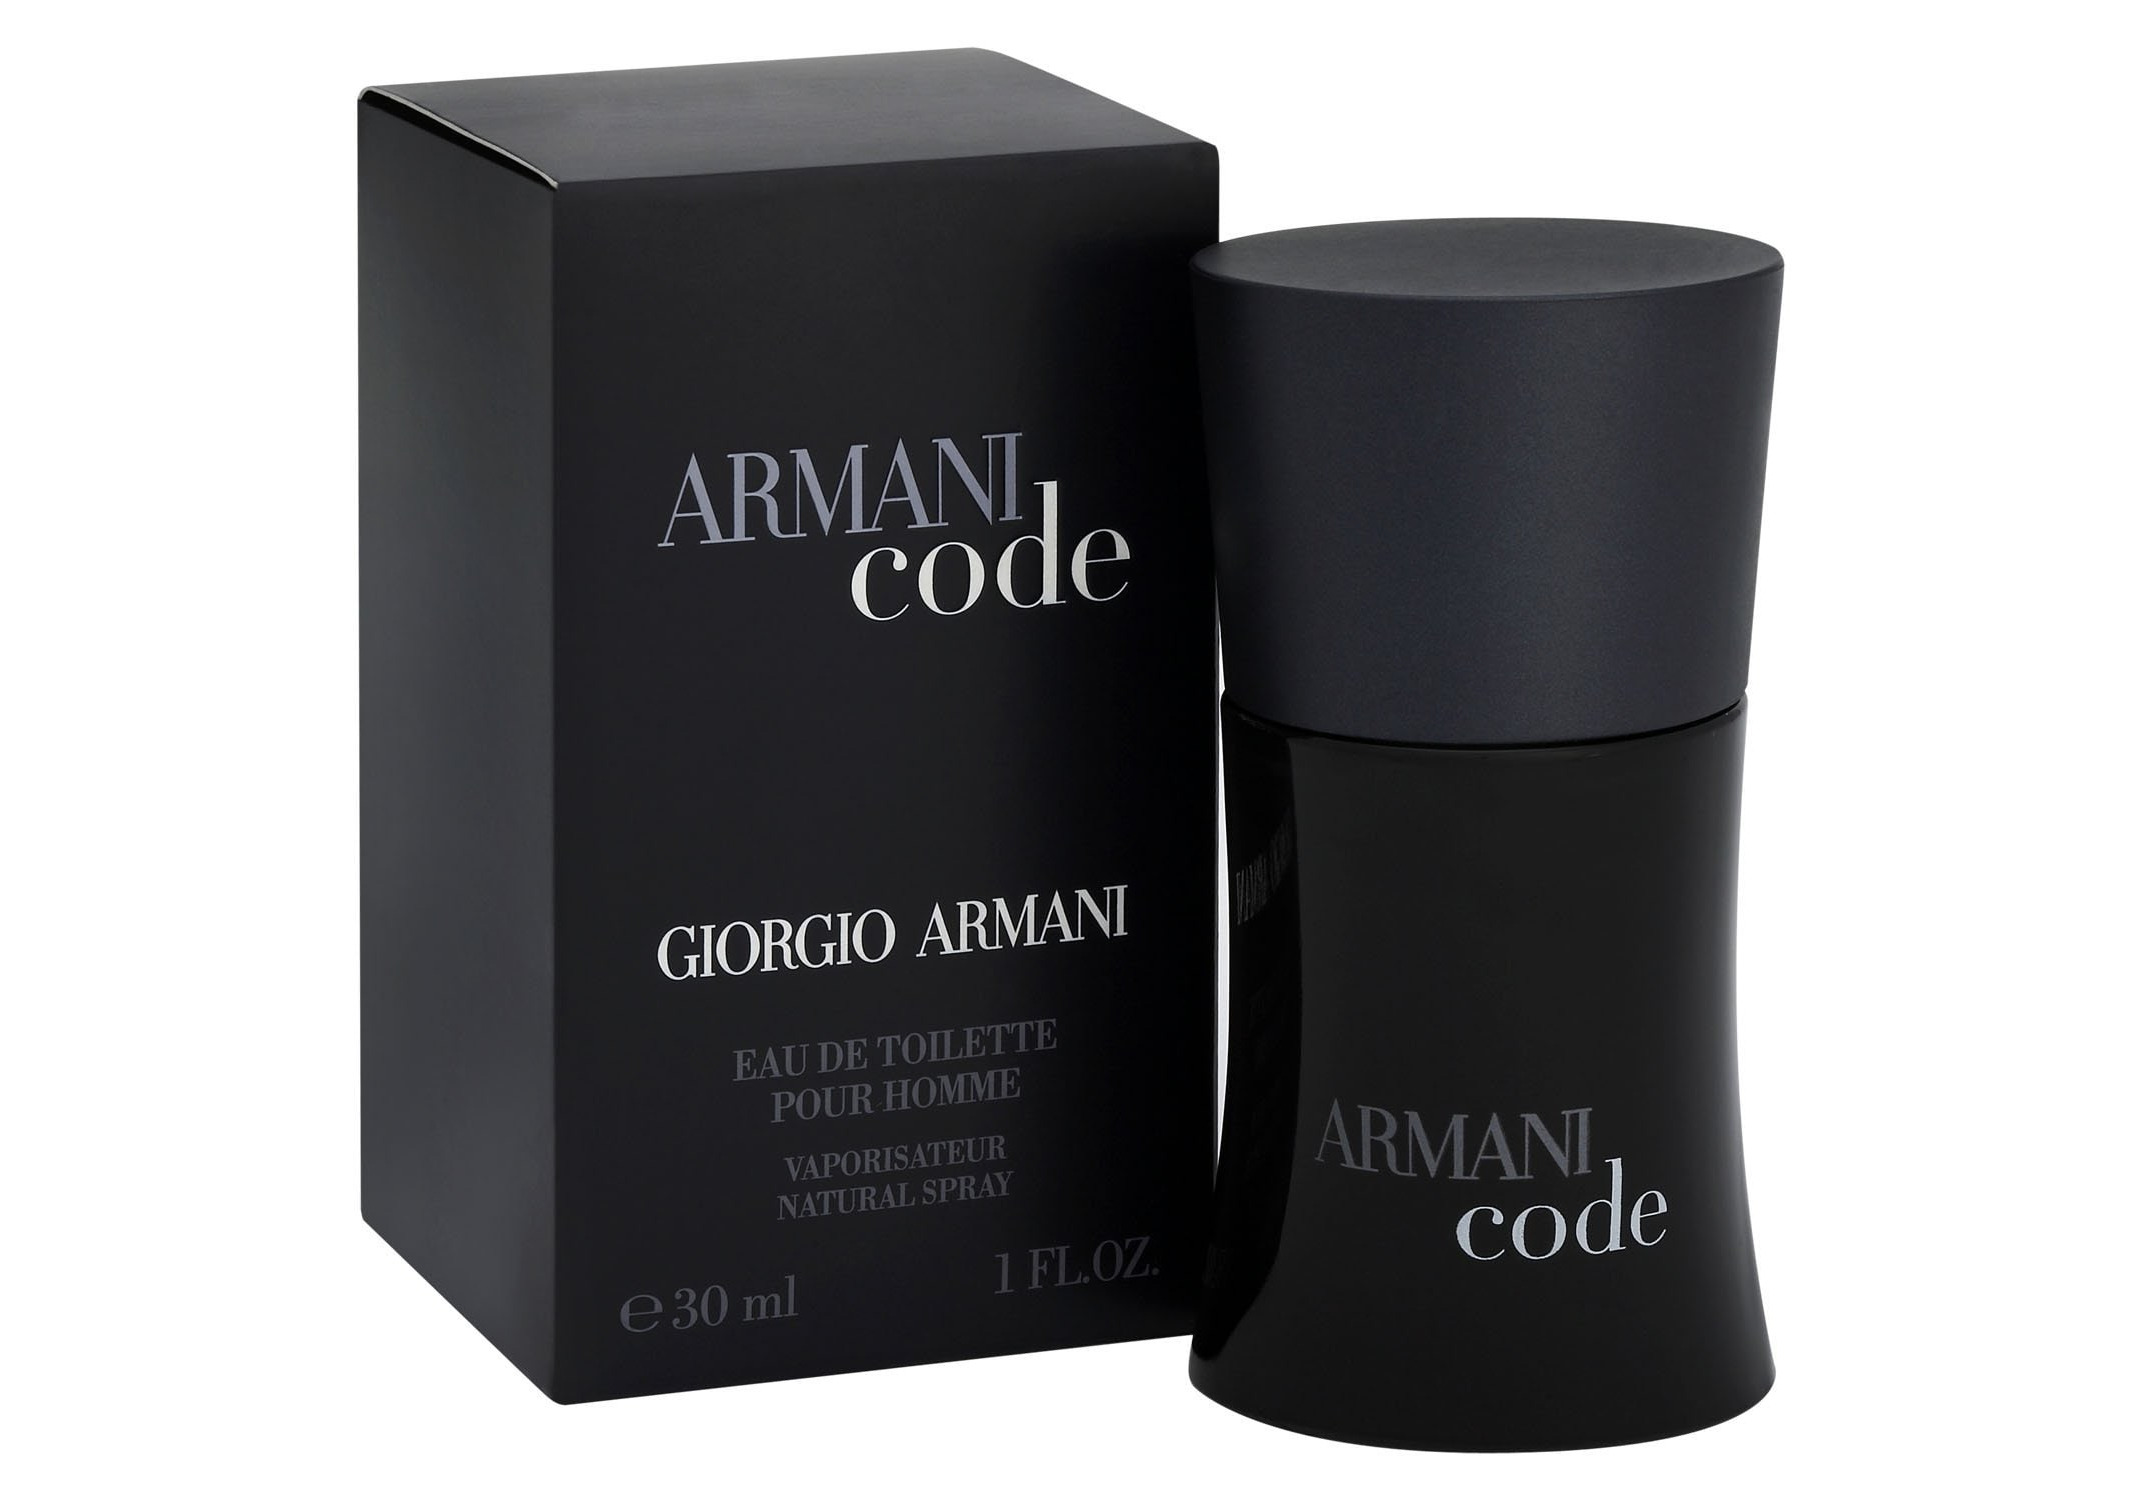 Code homme. Giorgio Armani "Armani code Parfum" 125 ml. Giorgio Armani code мужские духи. Armani code Parfum Giorgio Armani для мужчин. Giorgio Armani Armani code.